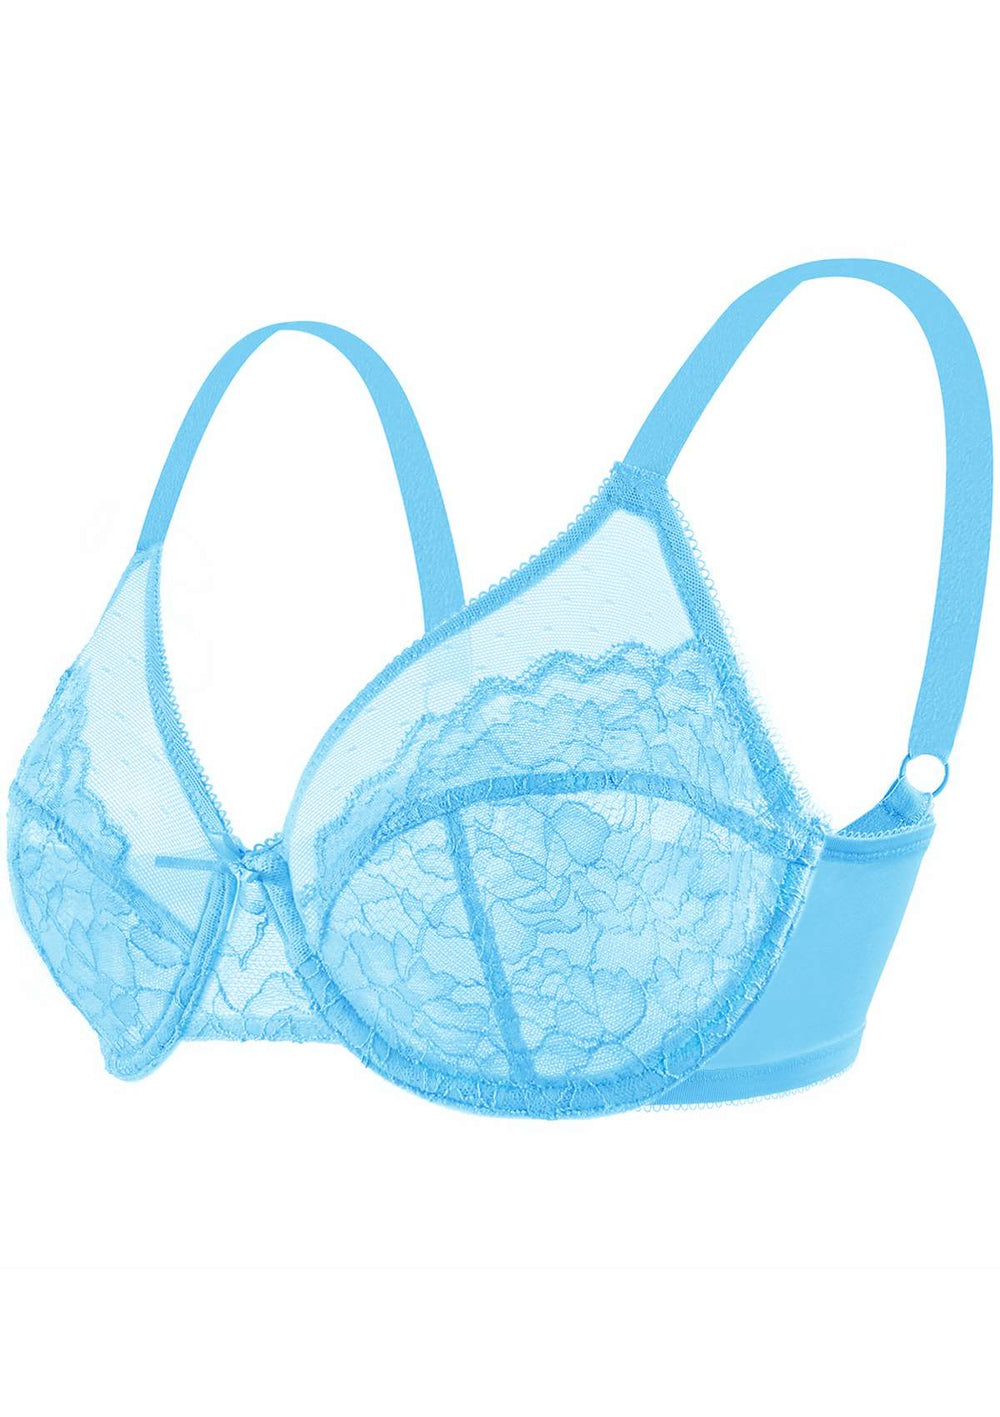 Entyinea Minimizer Bras for Women Soft Touch Breathe Bralette Blue